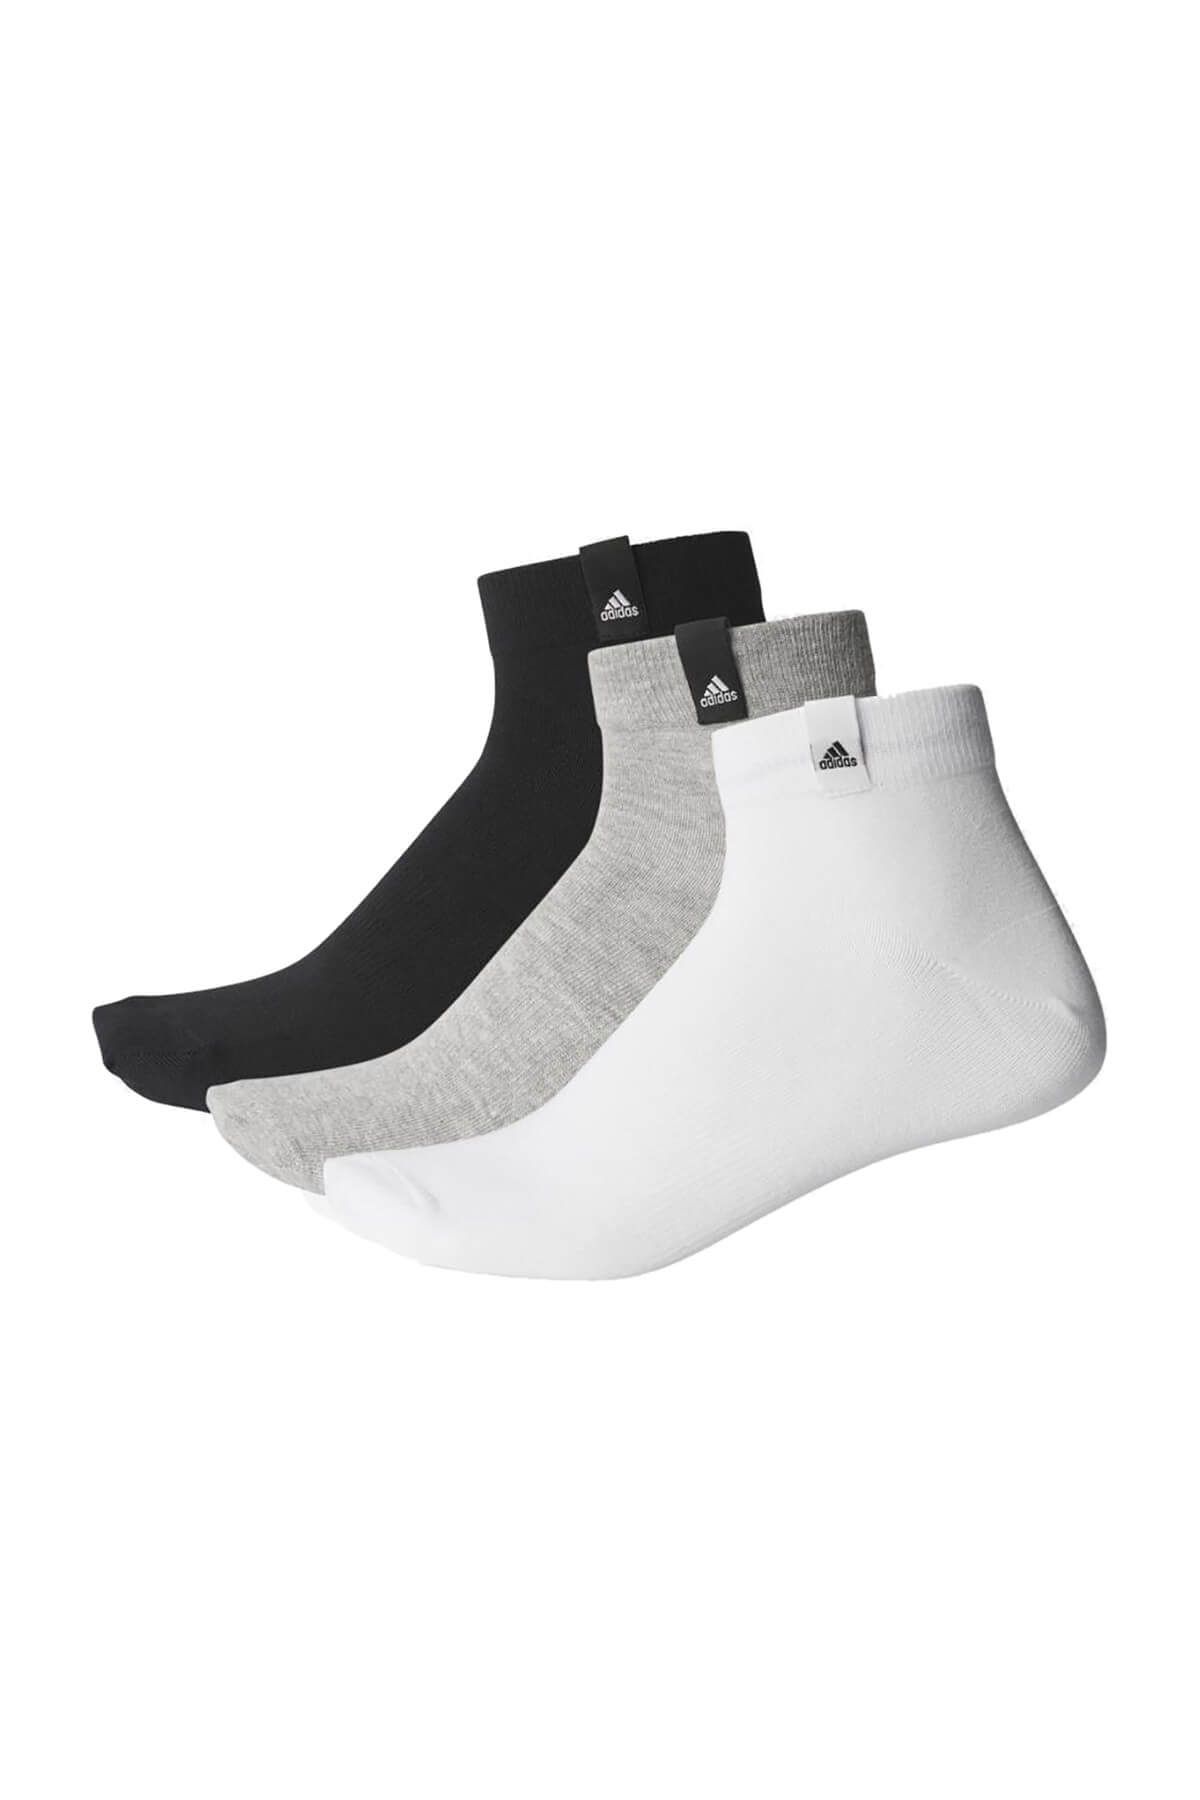 adidas Per La Ankle 3p Beyaz Gri Siyah Unisex Çorap 100406967